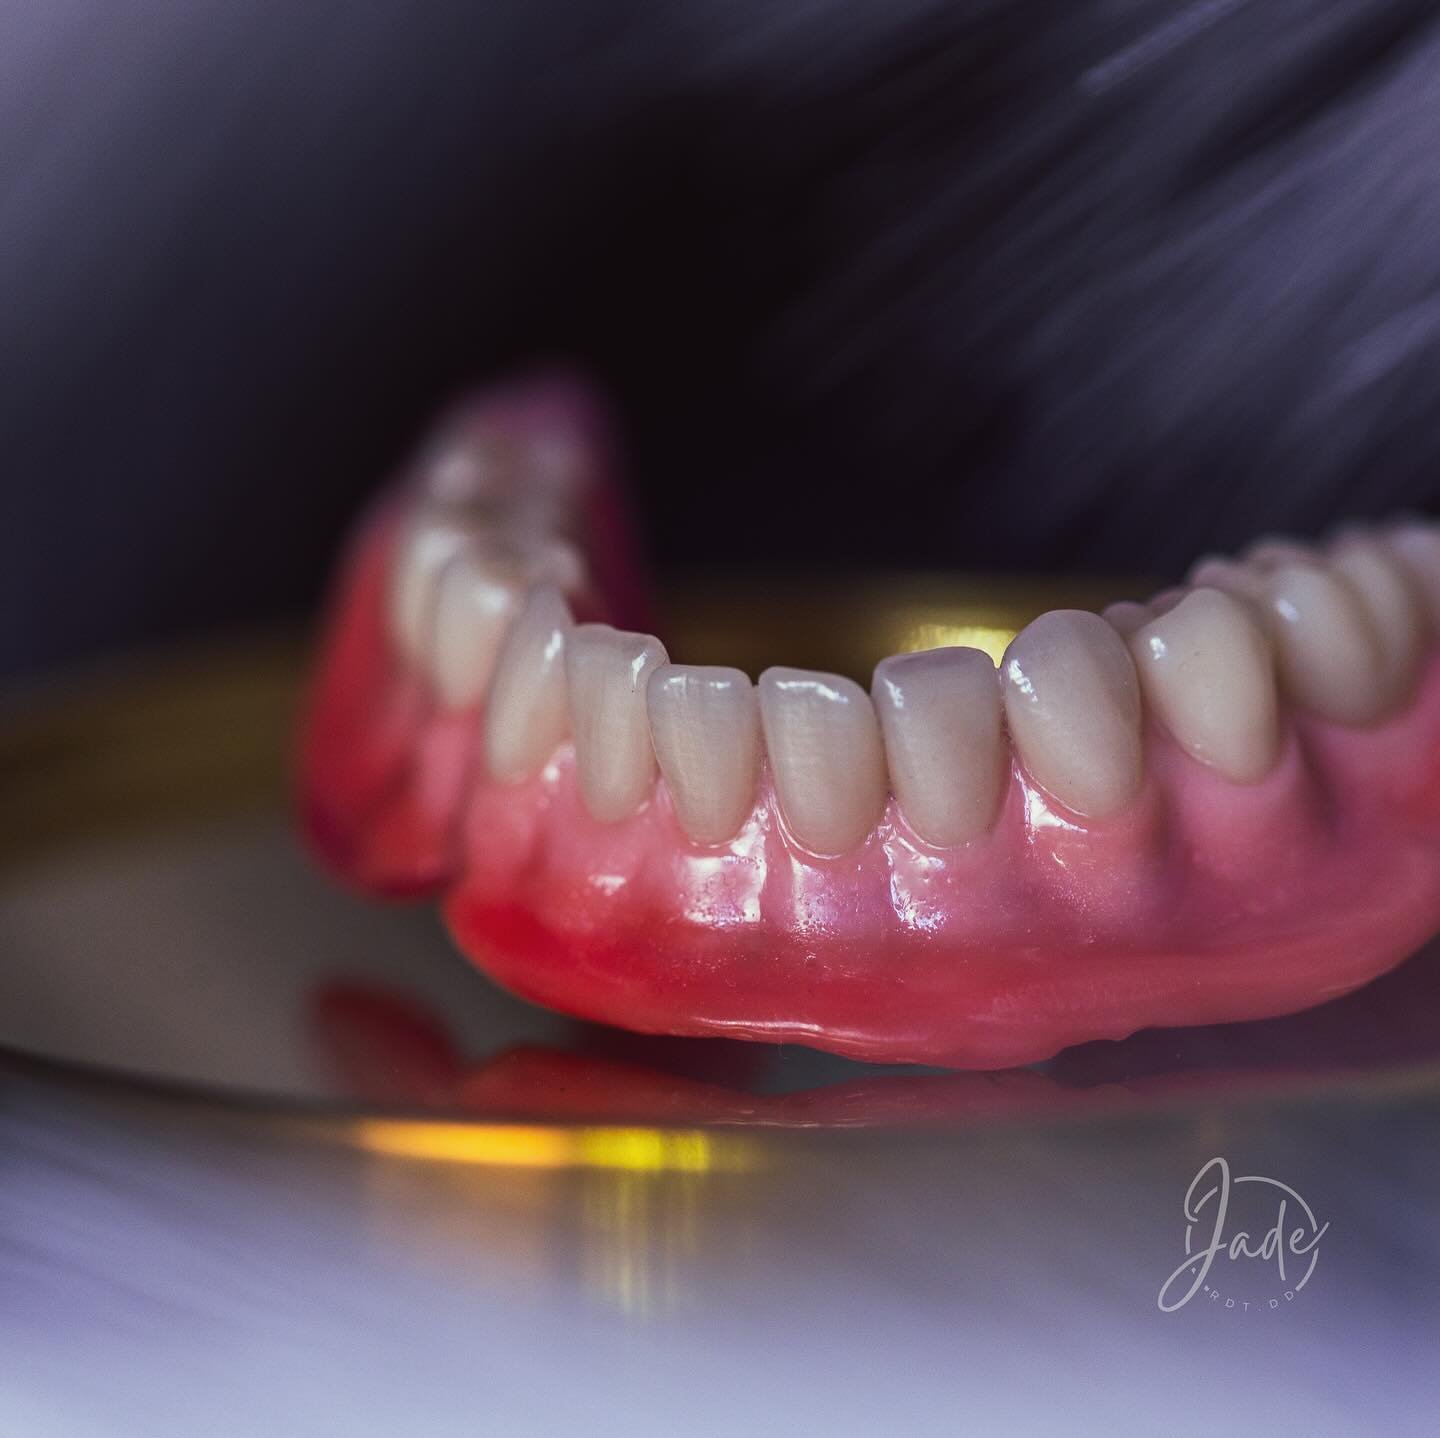 Elegance in wax.
.
.
.
Teeth: @vita @vitanorthamerica 
Wax: @candulor 
Maker + photographer : @jade.rdtdd 🪶
.
.
.
#denturist #denture #lowerdenture #vita100years #smiledesign #analog #dentallabtech #dentallabtech #dental #dentistry #completedenture 